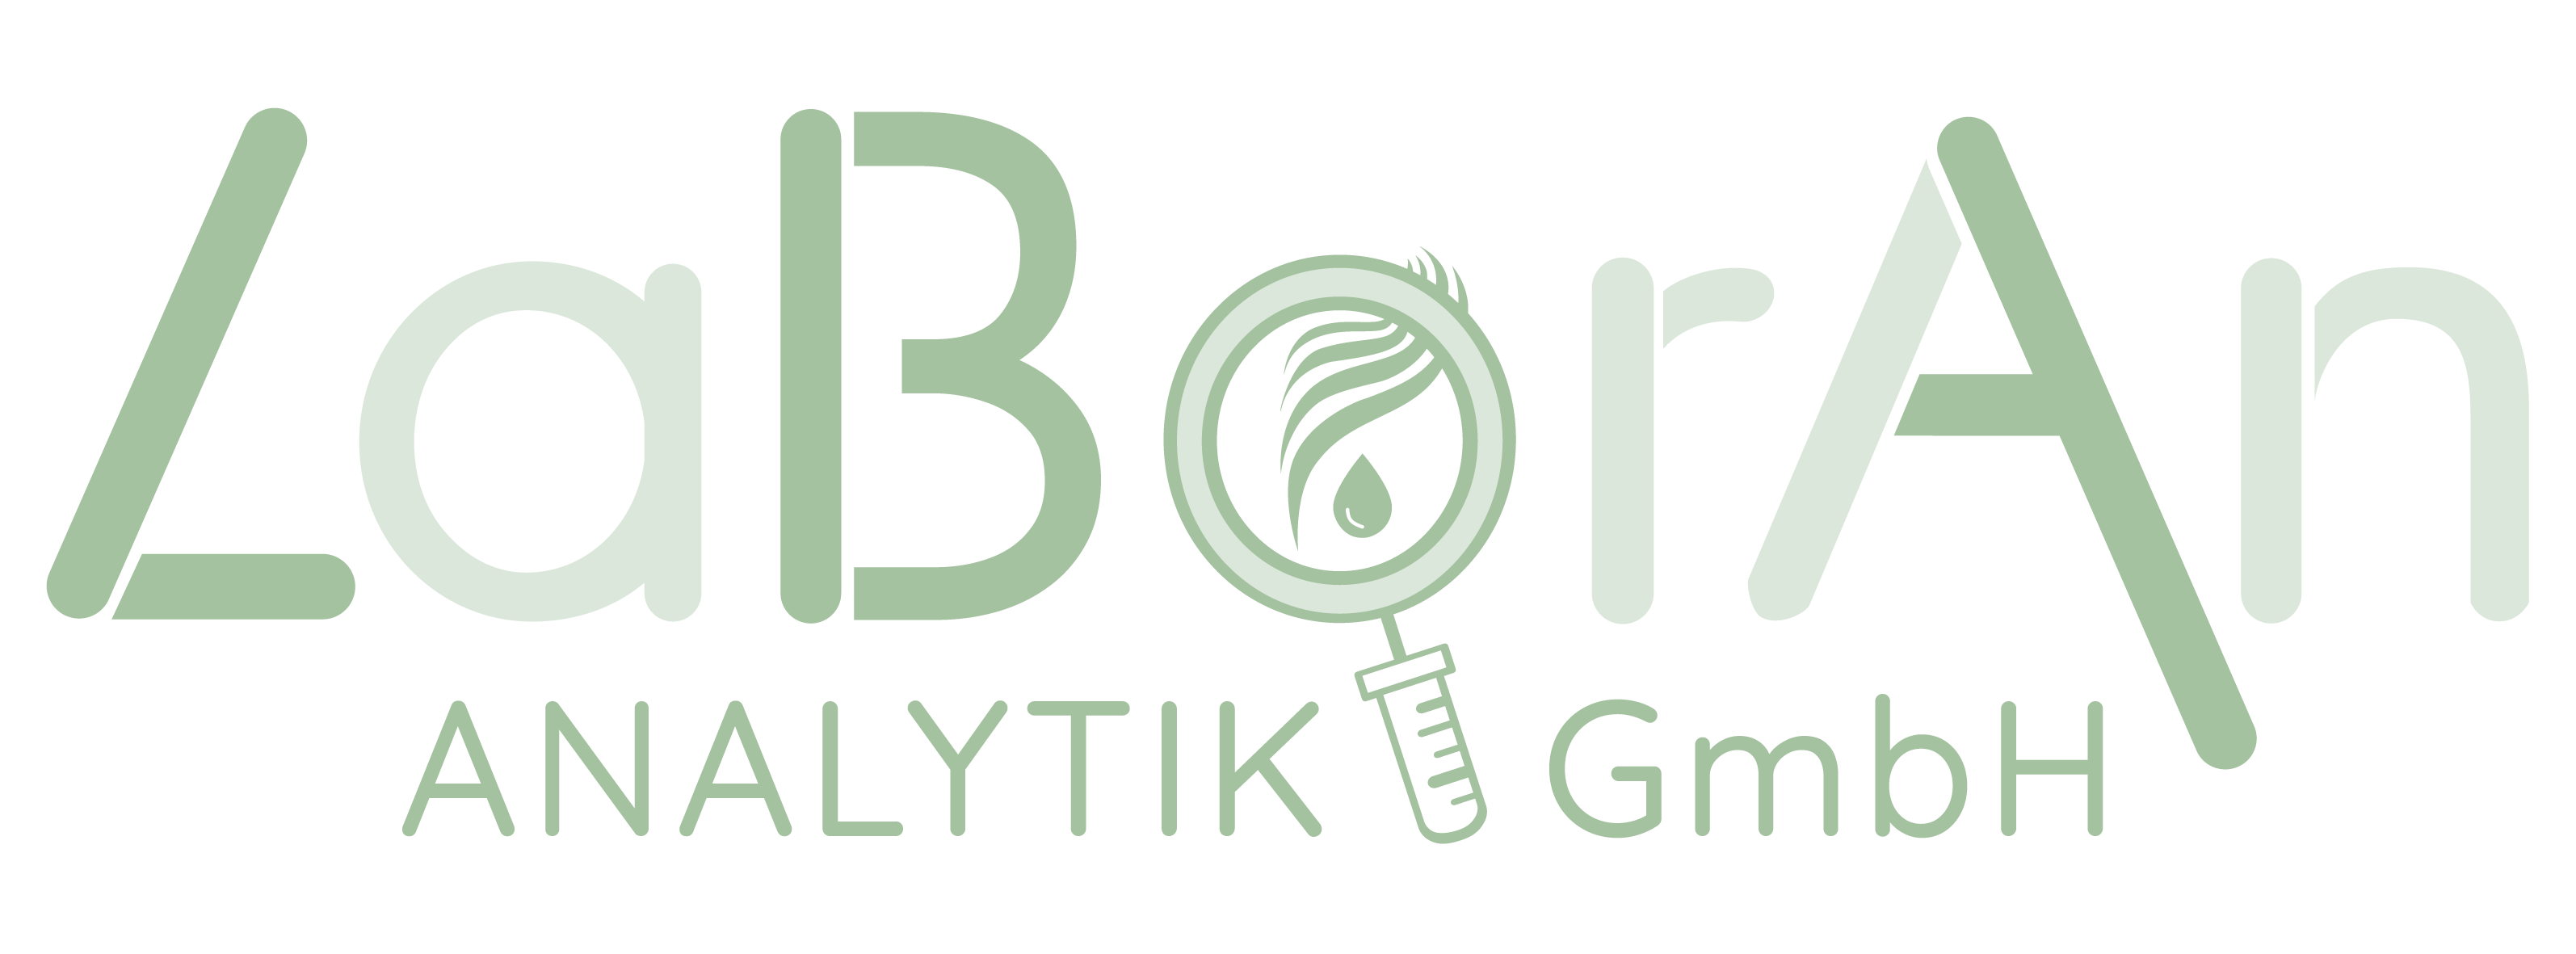 Logo LaborAn Analytik GmbH